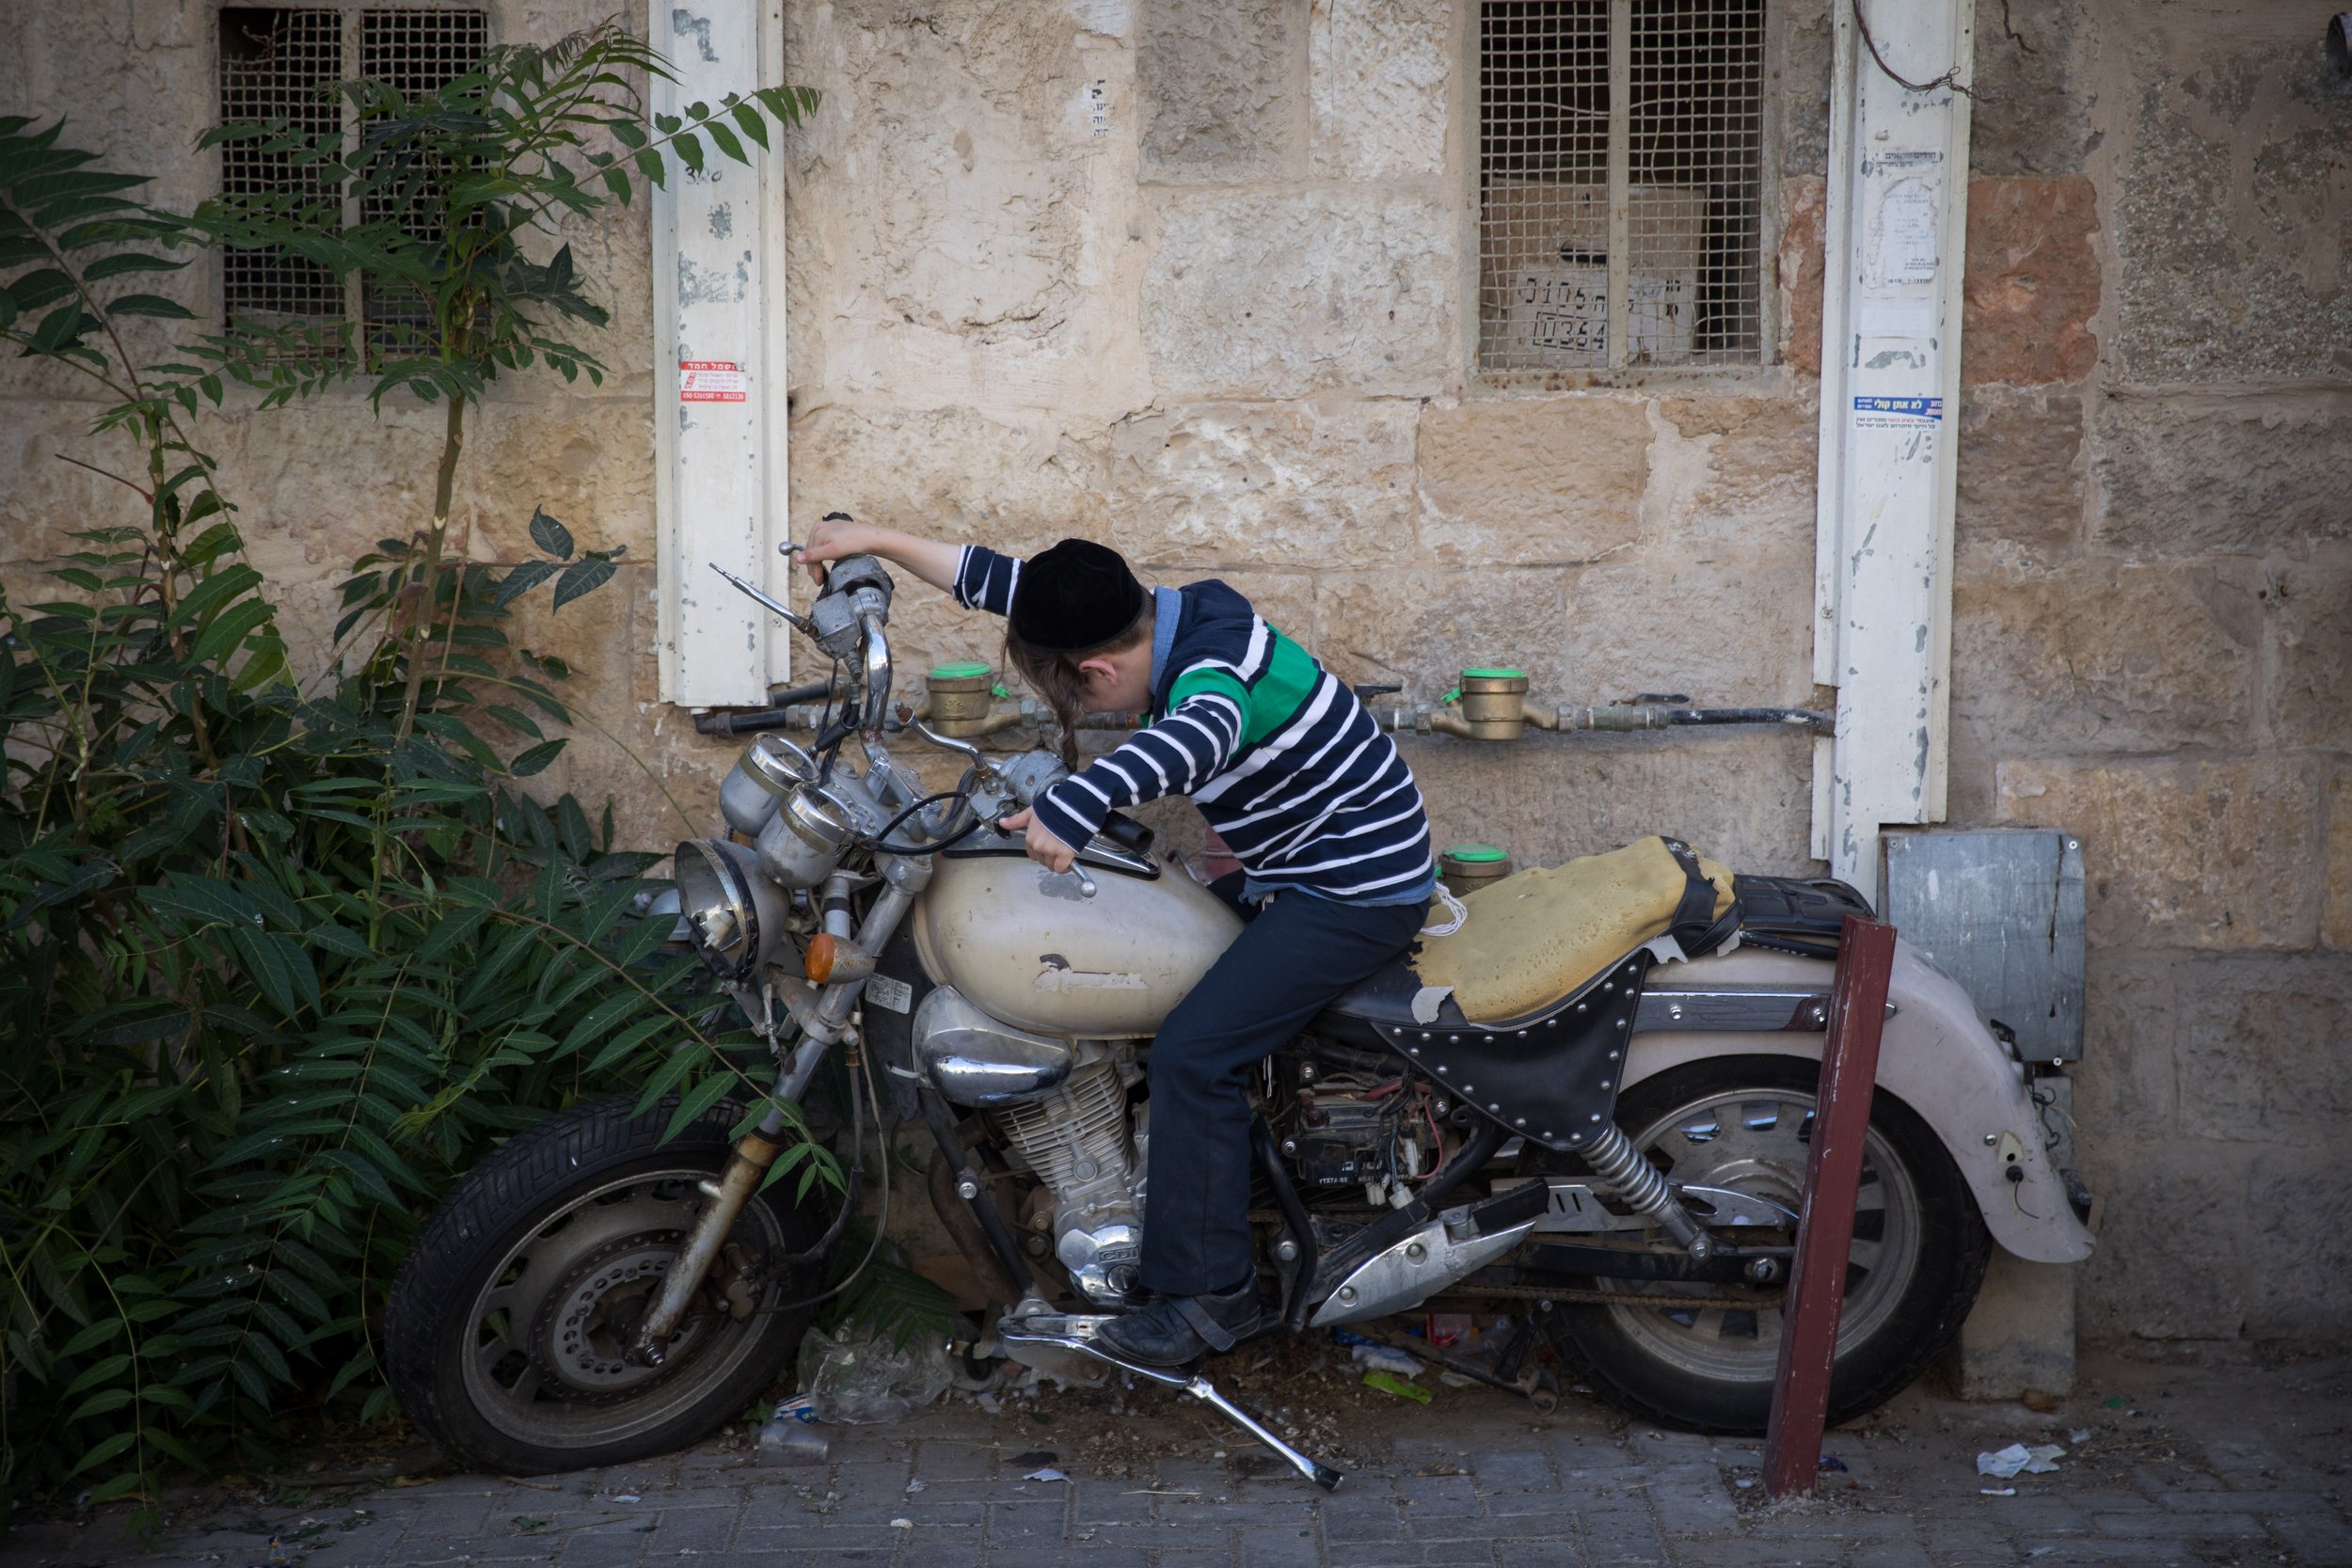  Ultra Orthodox Jews kids sit on a motorcycle in the ultra orthodox neighborhood of Meah Shearim, in Jerusalem. October 6, 2019. 